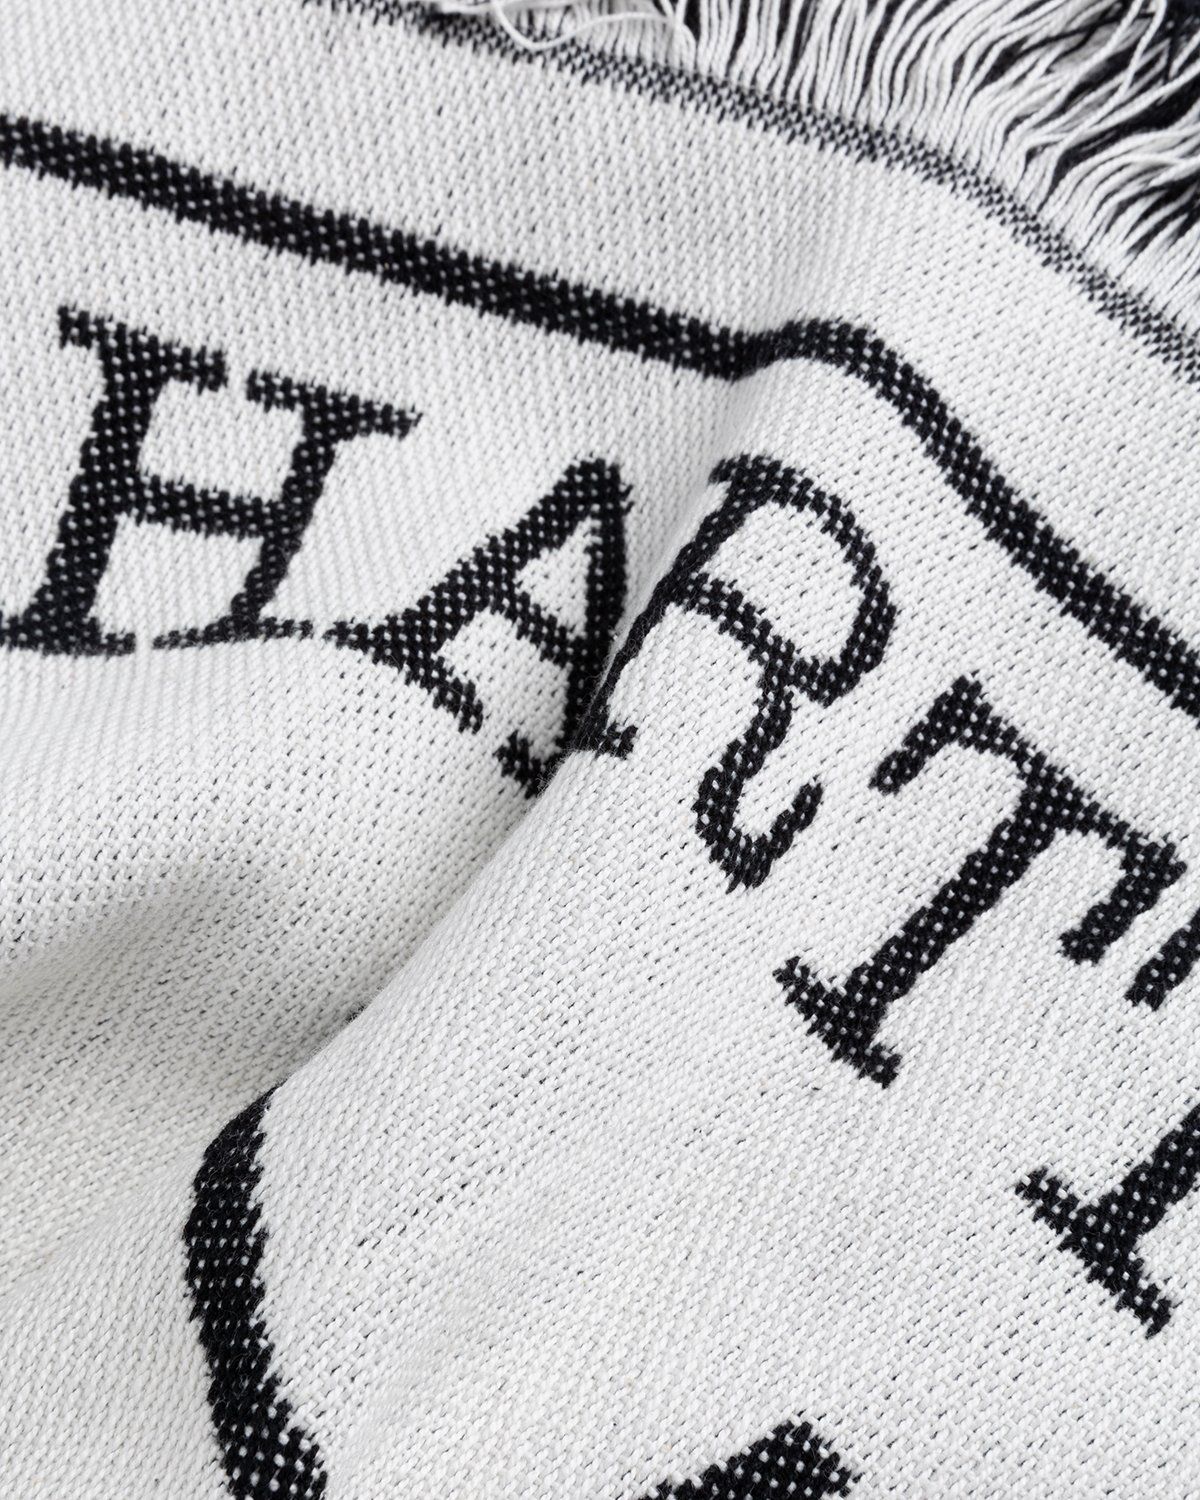 Carhartt WIP – Whisper Woven Blanket Wax Black - Lifestyle - White - Image 6